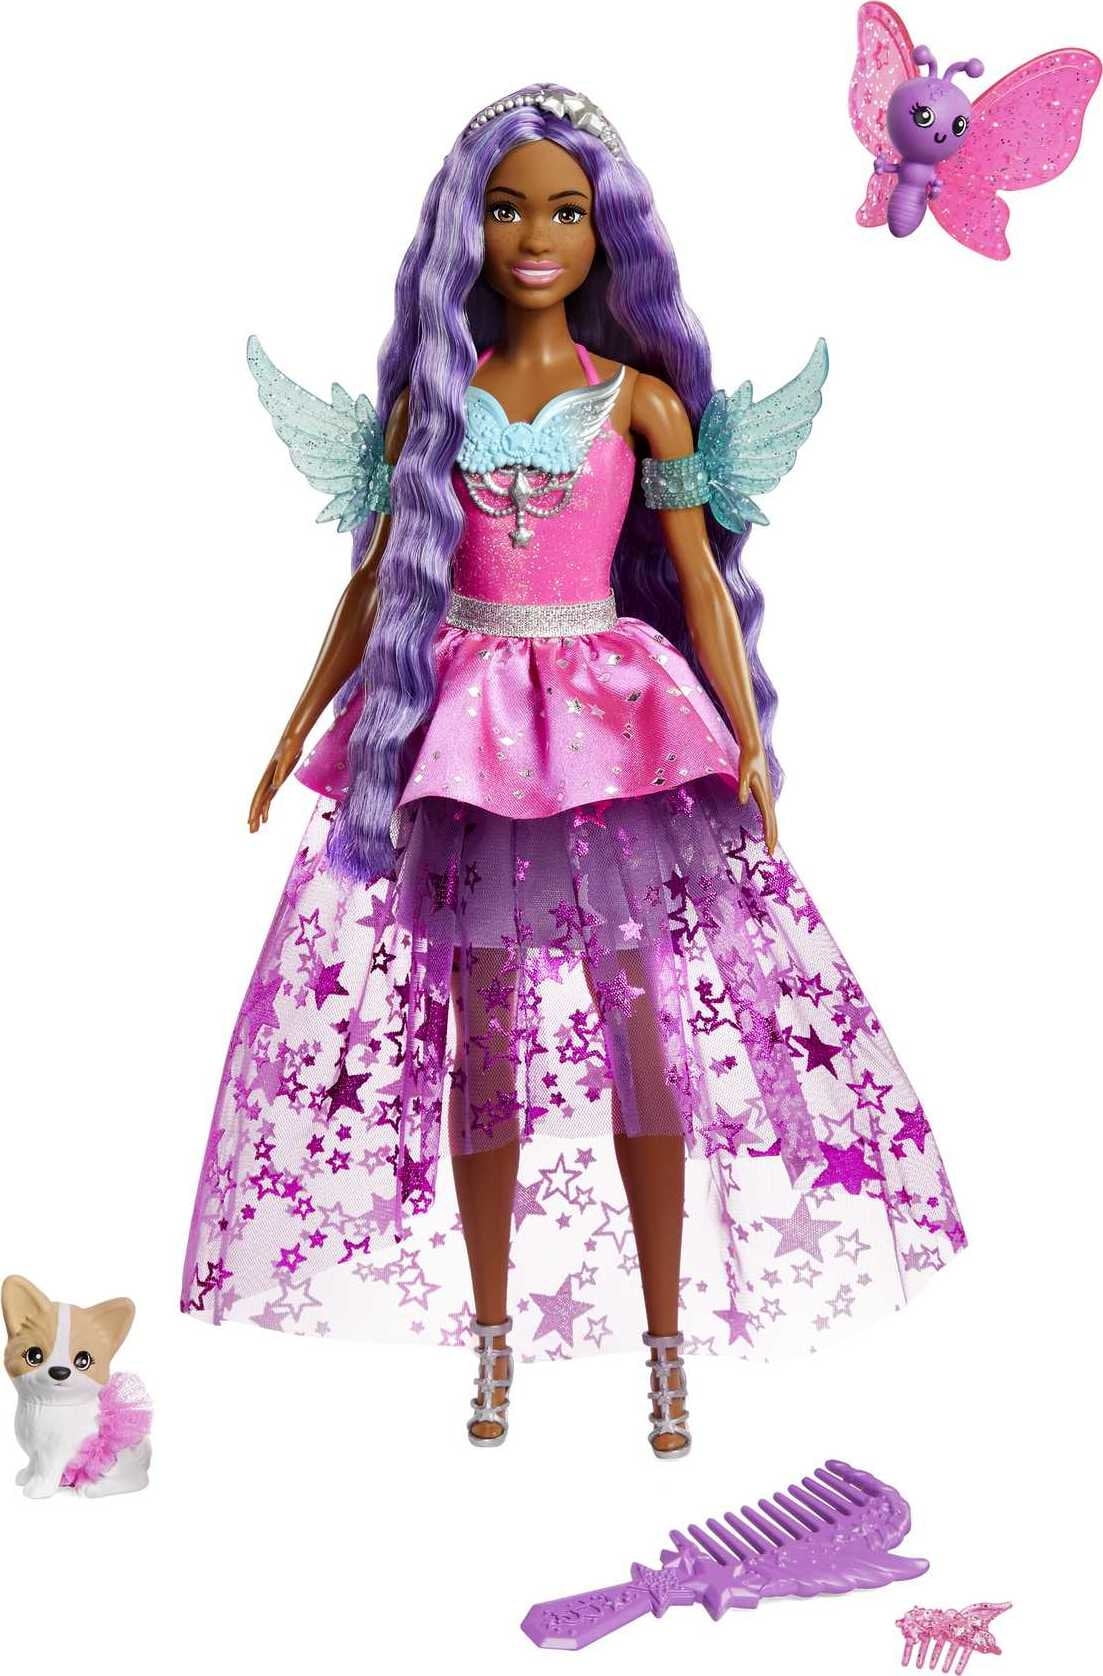 Barbie Fairytale Multipack Dolls